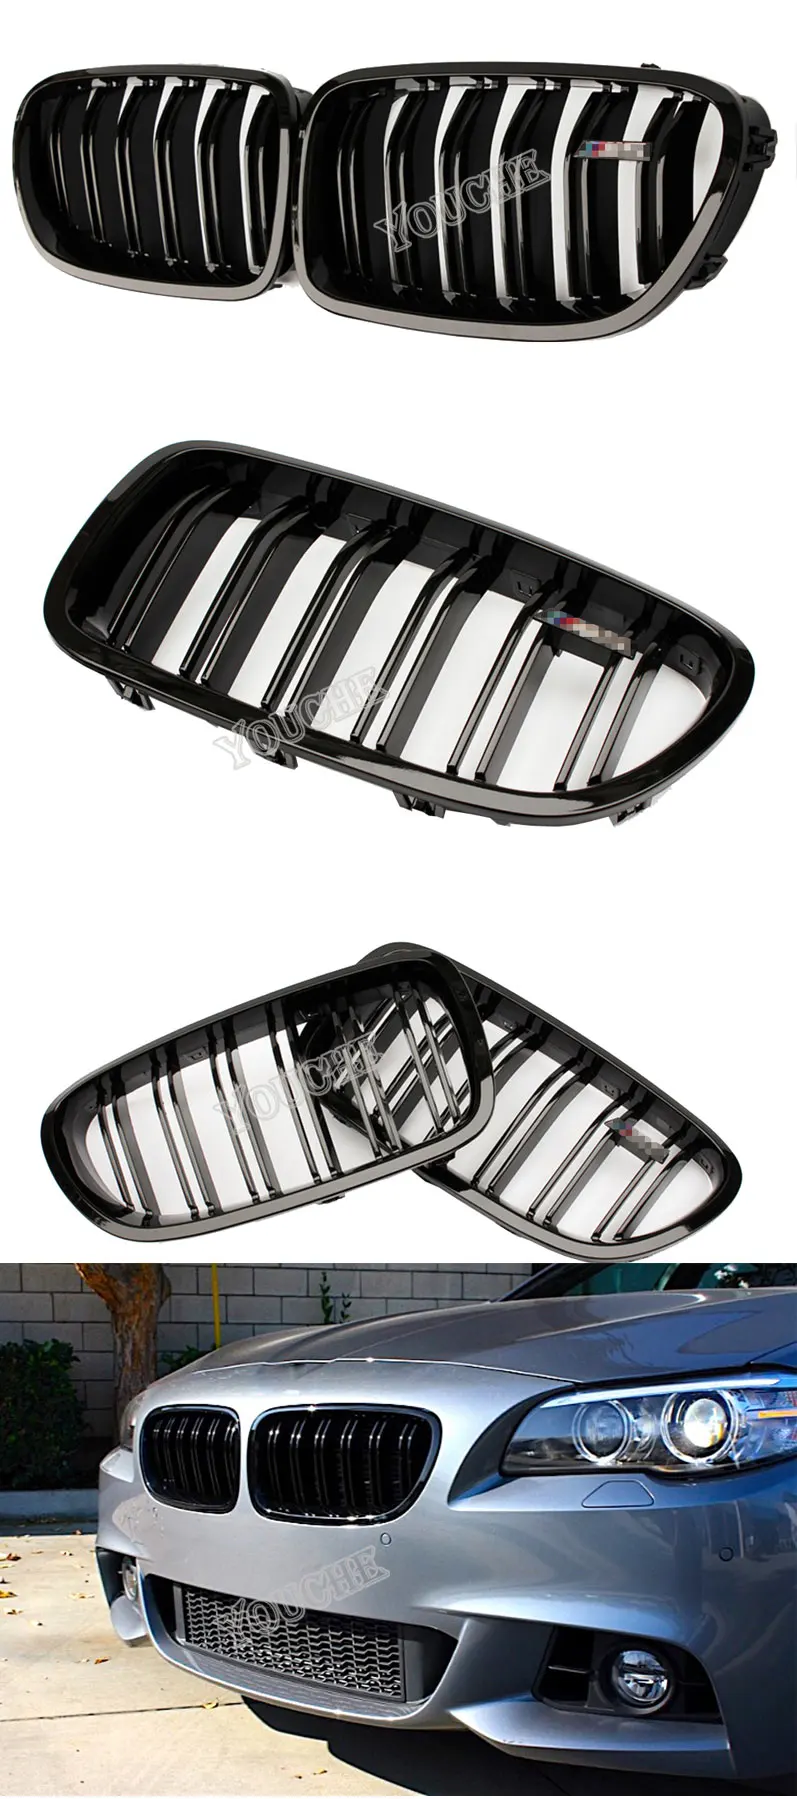 F10 ABS Глянцевая черная M цветная углеродная волокнистая решетка для BMW F10 F11 5 серии 2010- Передняя решетка для почек 520i 523i 525i 530i 535i